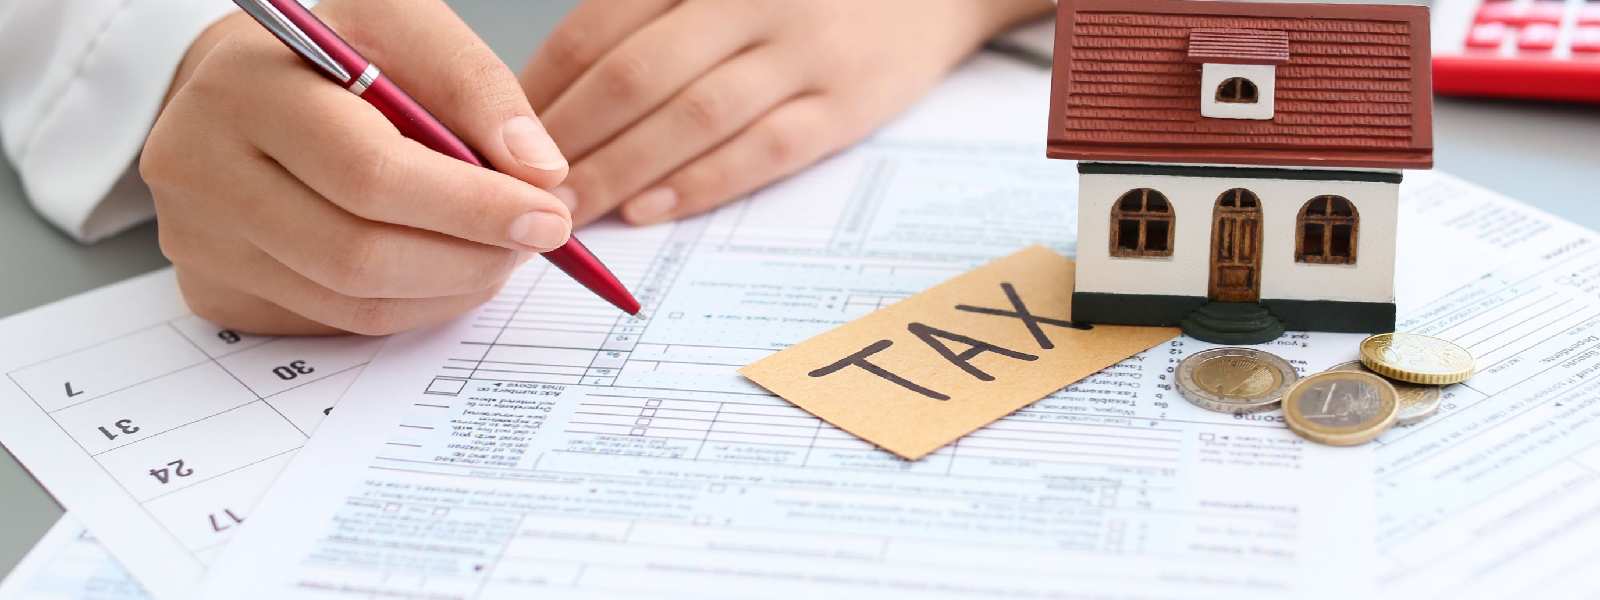 Sri Lanka Tax ID Fines On Hold